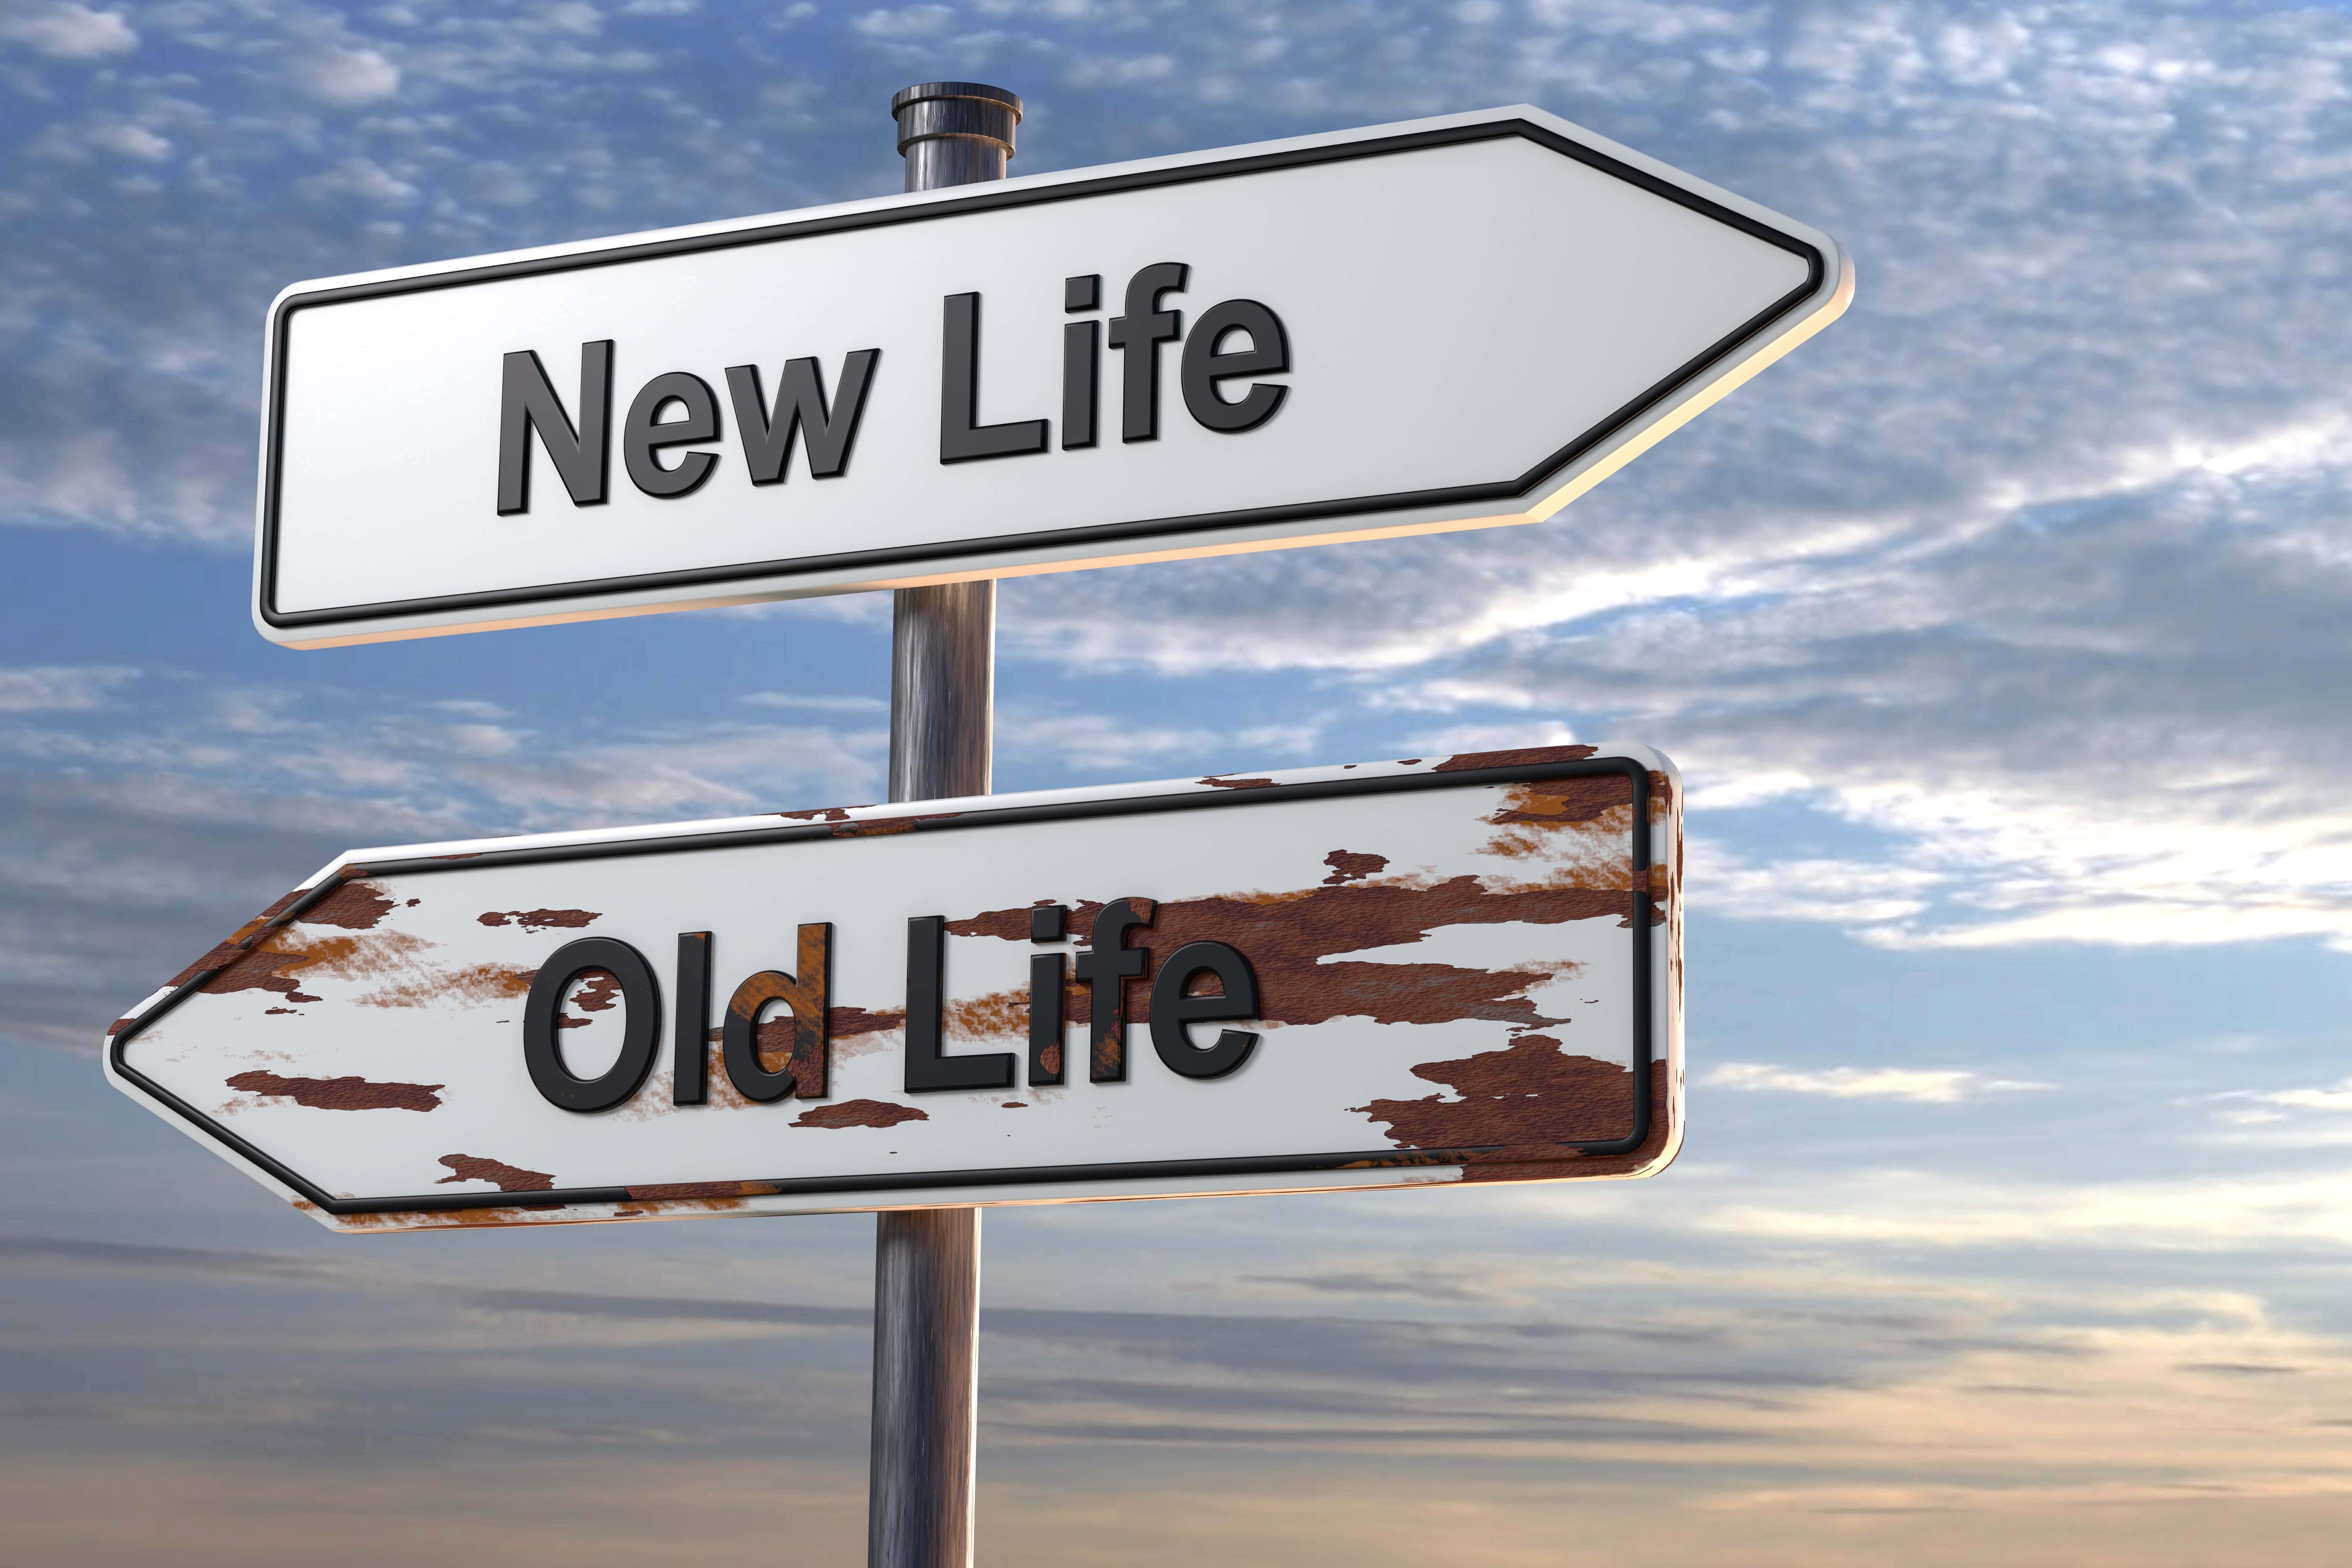 Start new life. The New Life. New Life картинки. New Life надпись. New Life old Life.